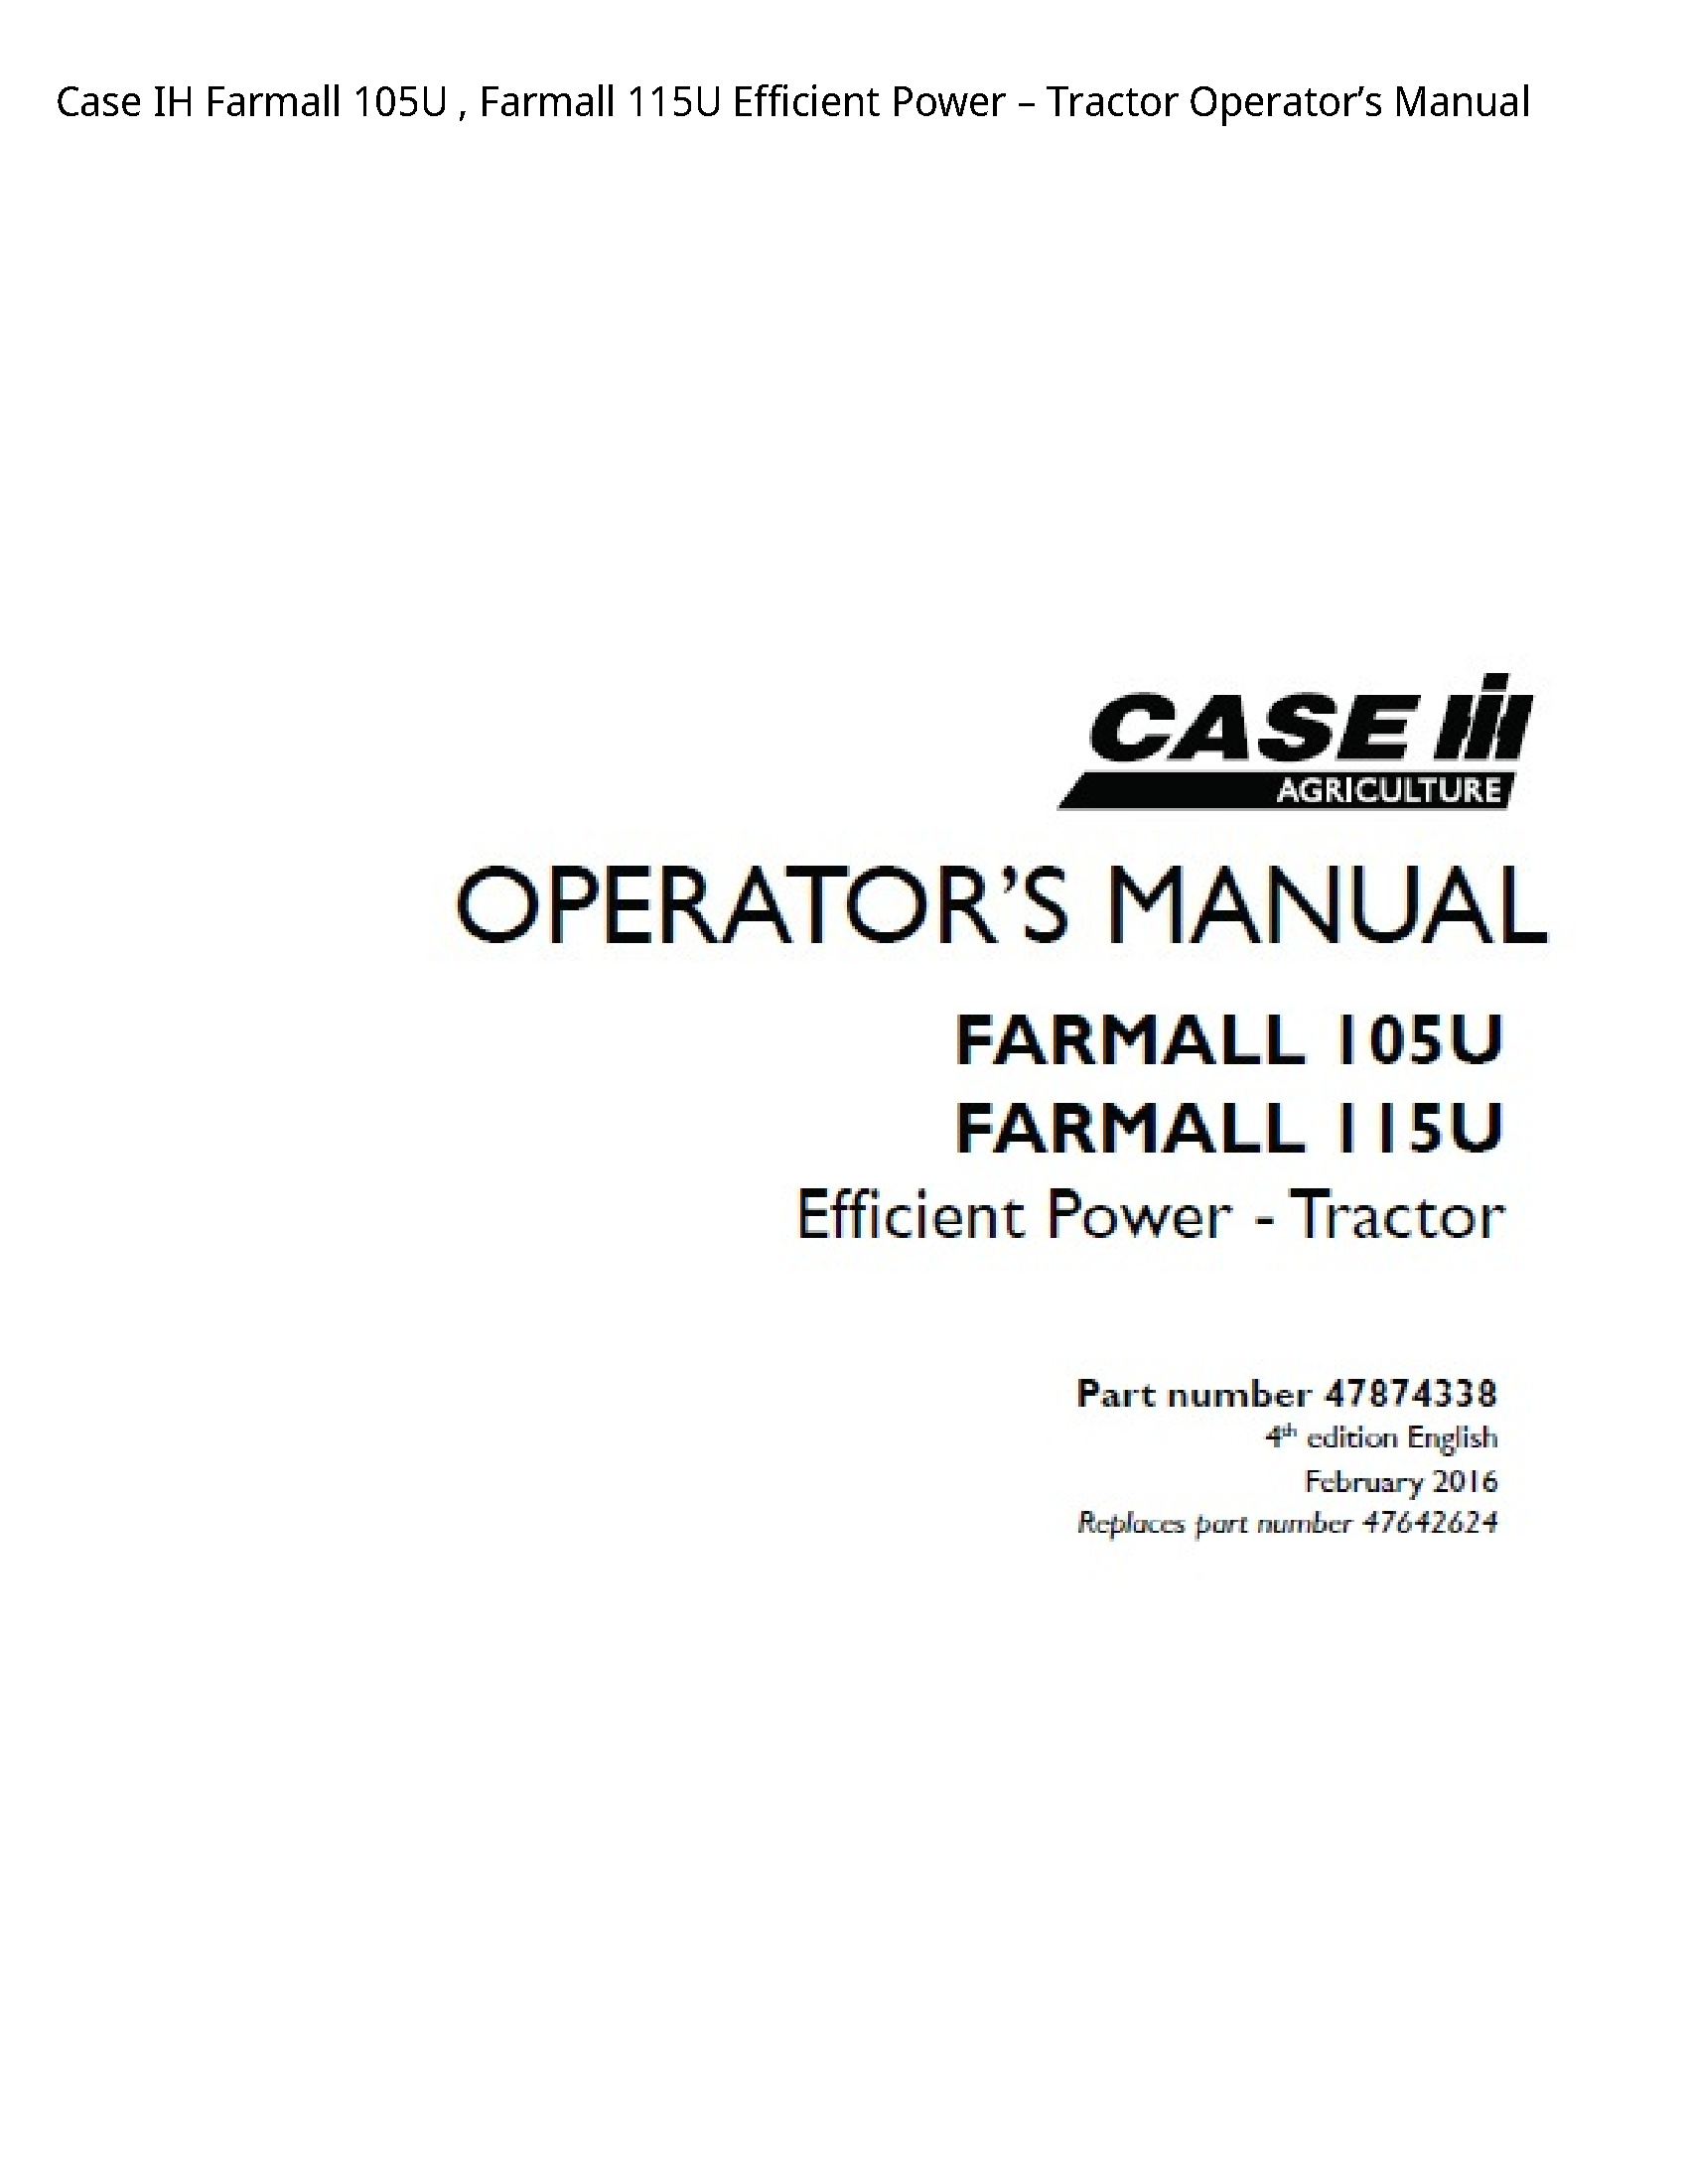 Case/Case IH 105U IH Farmall Farmall Efficient Power Tractor Operator’s manual